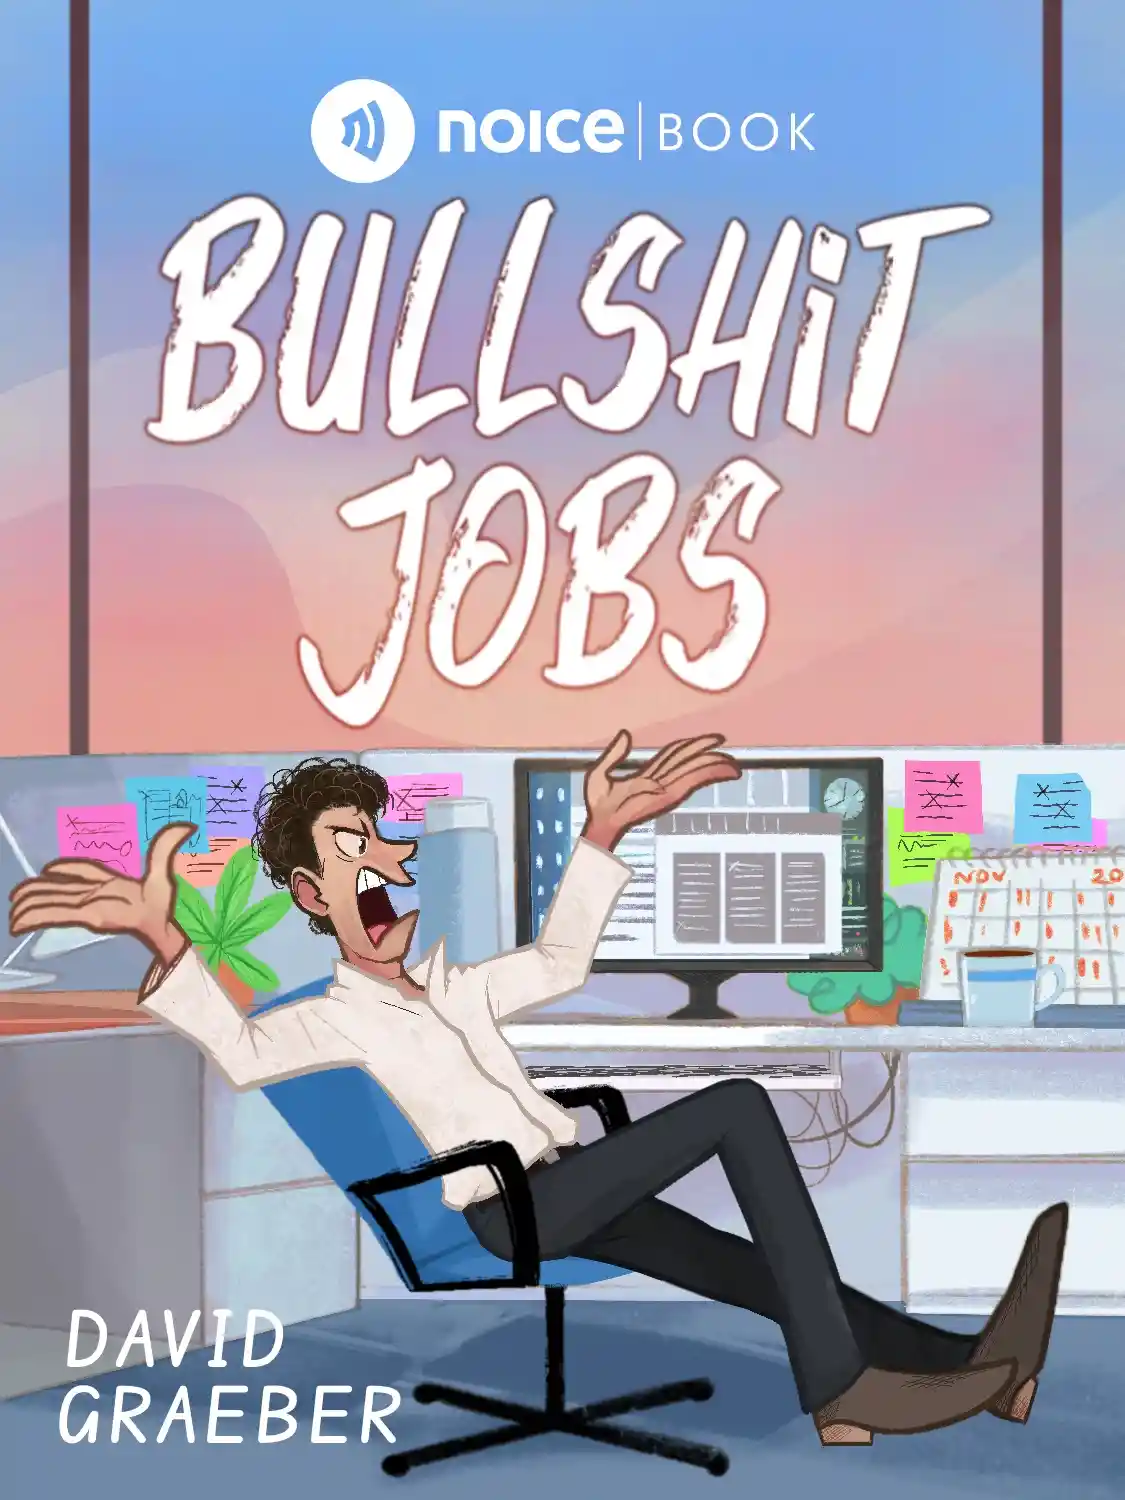 #3 Bullshit job membuat karyawan kehilangan rasa berharga atas dirinya.